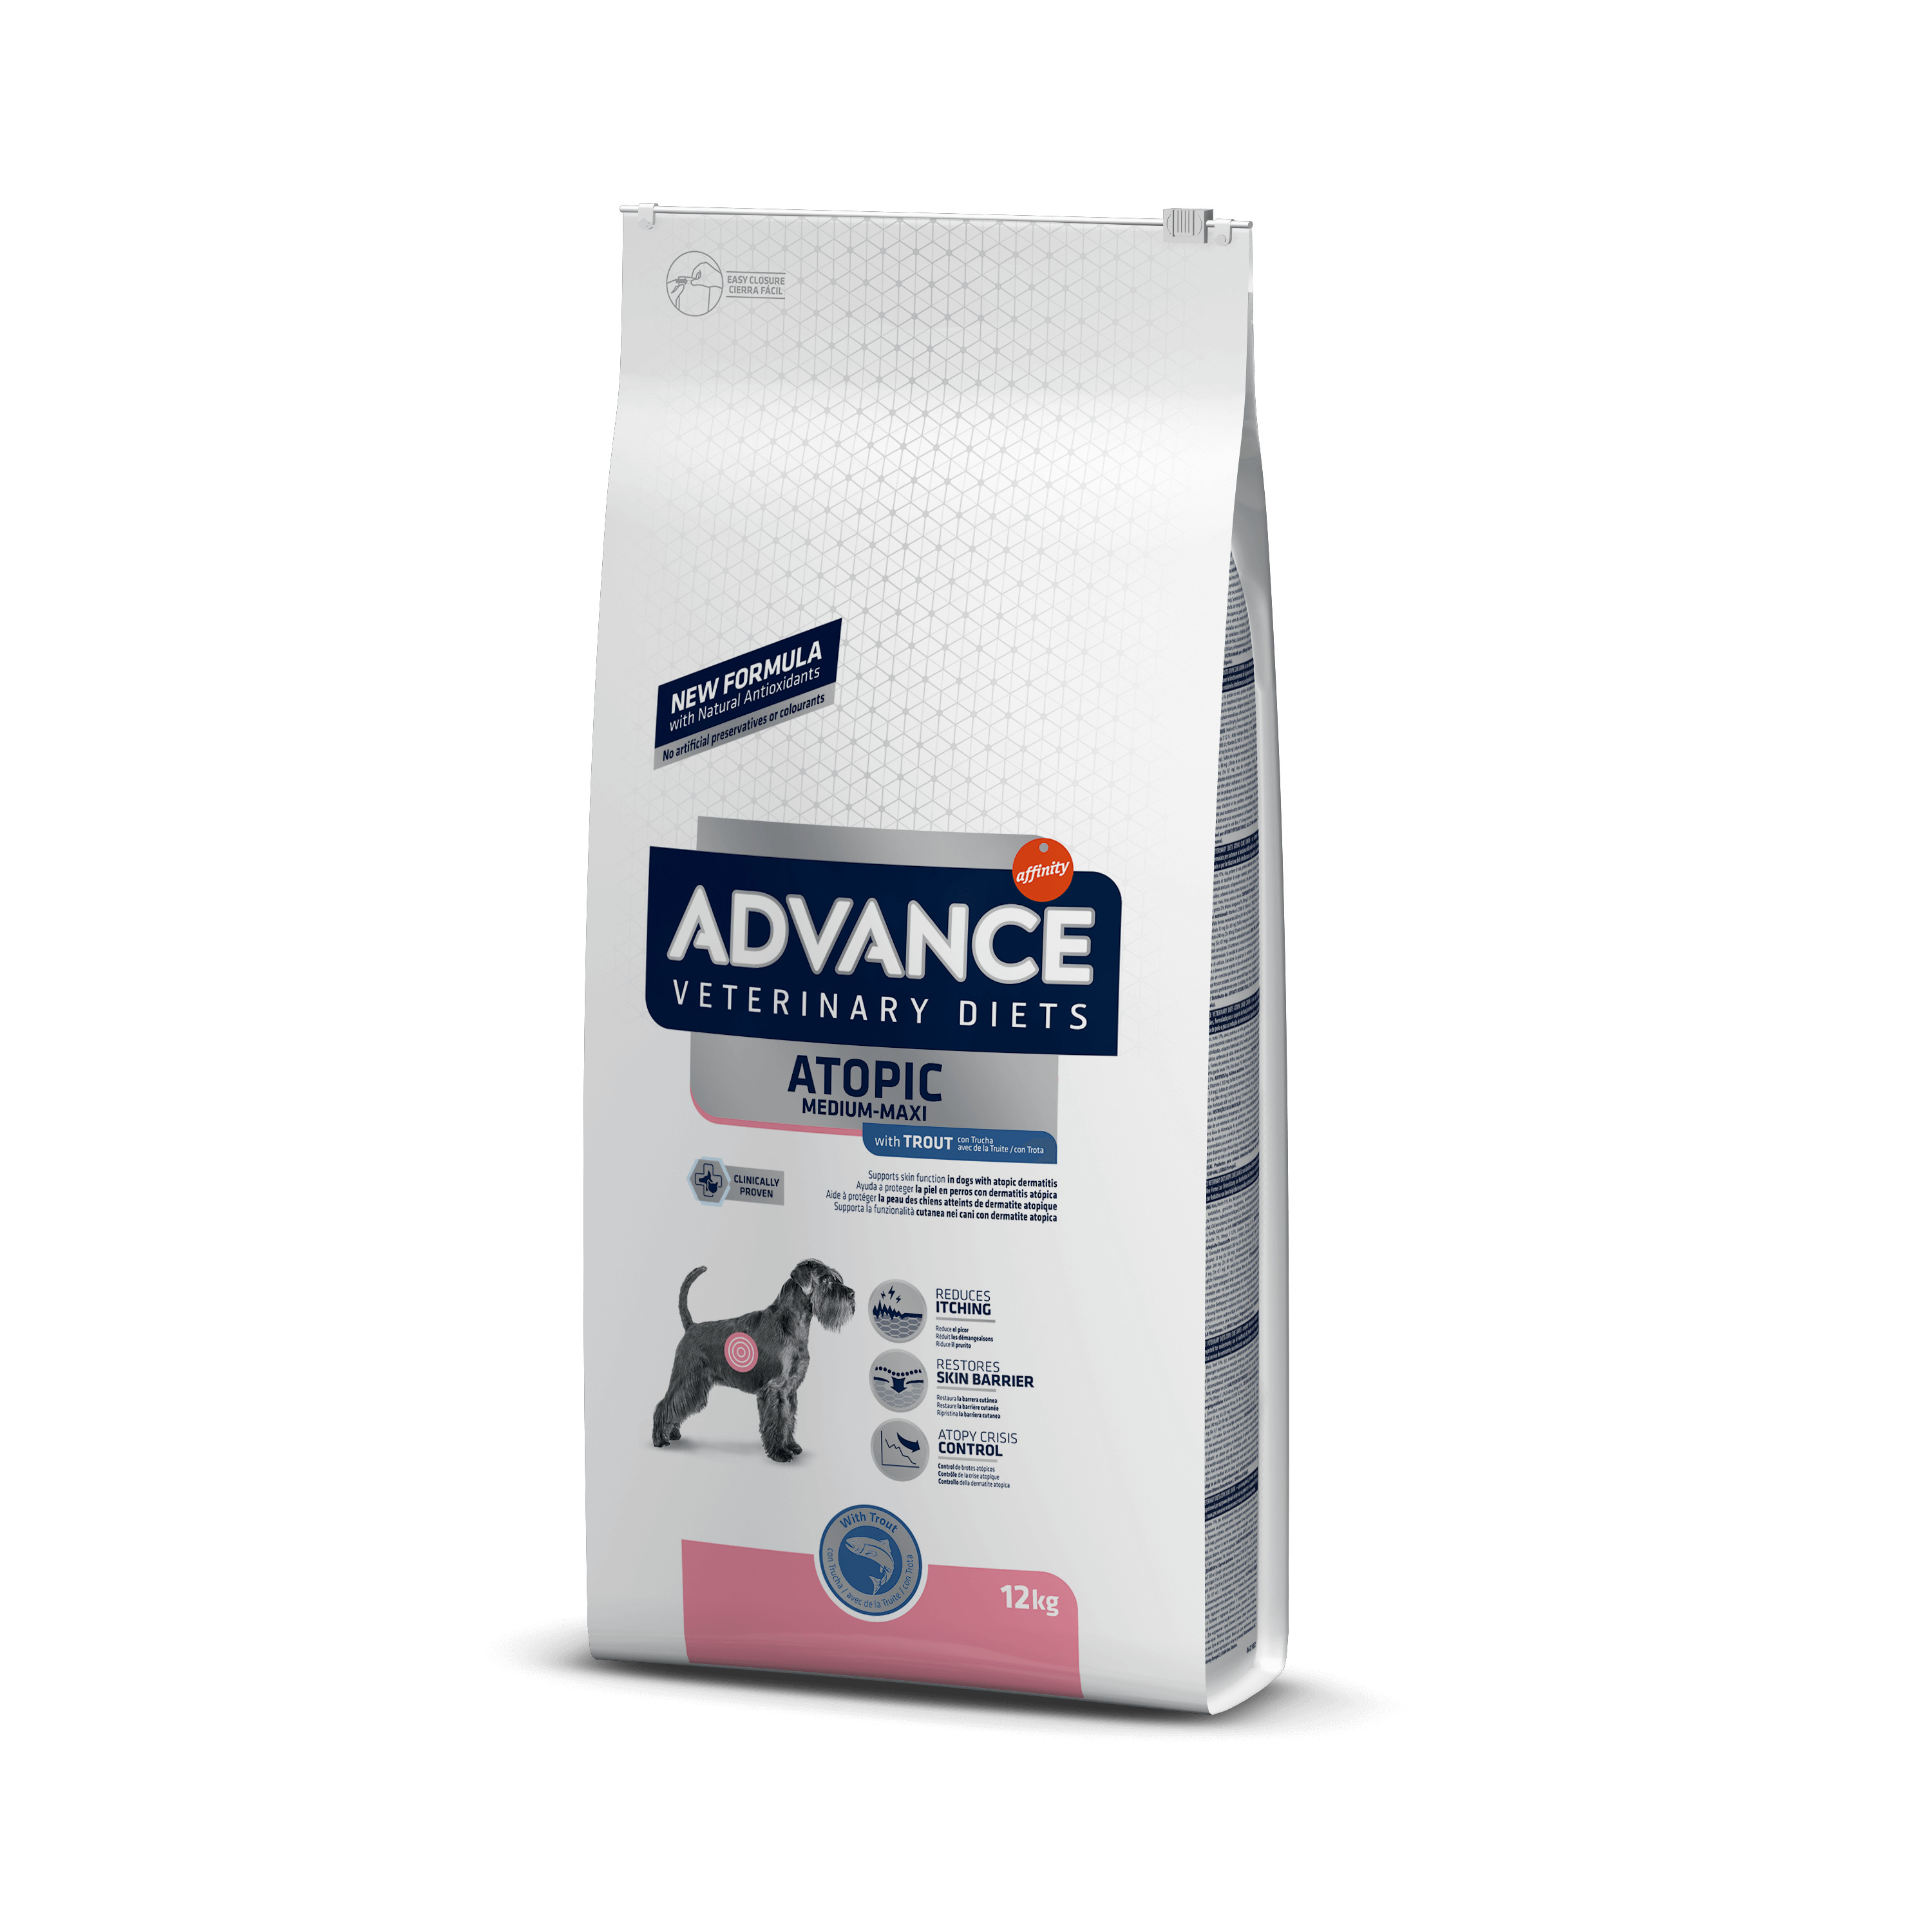 Afbeelding van 12 kg Advance Veterinary Diets Atopic Medium Maxi met forel hondenvoer